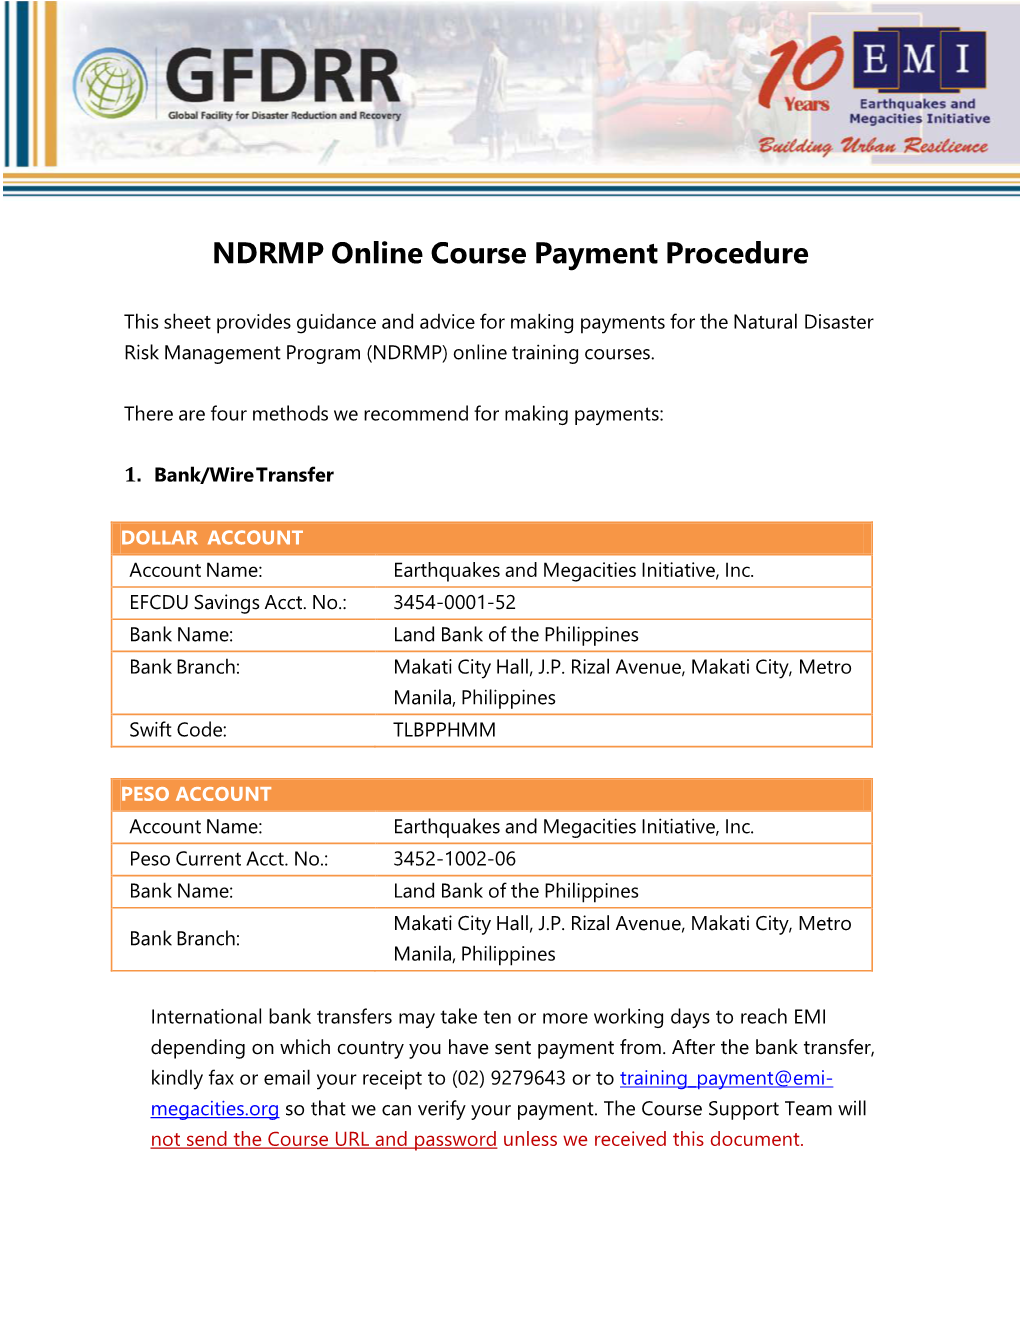 NDRMP Online Course Payment Procedure